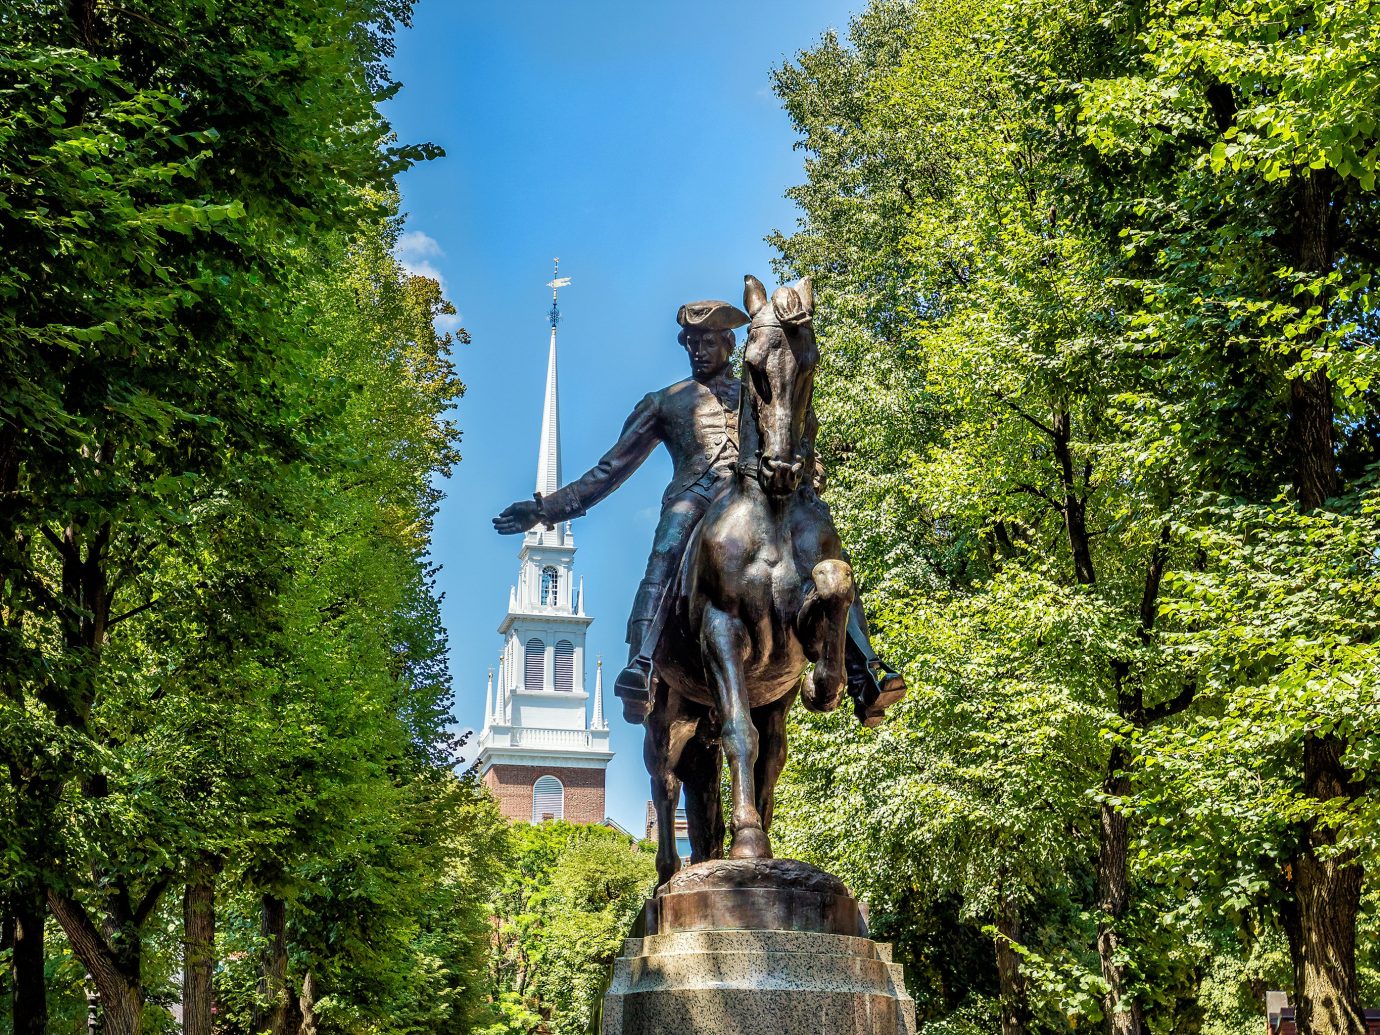 Statue of Paul Revere in Boston.